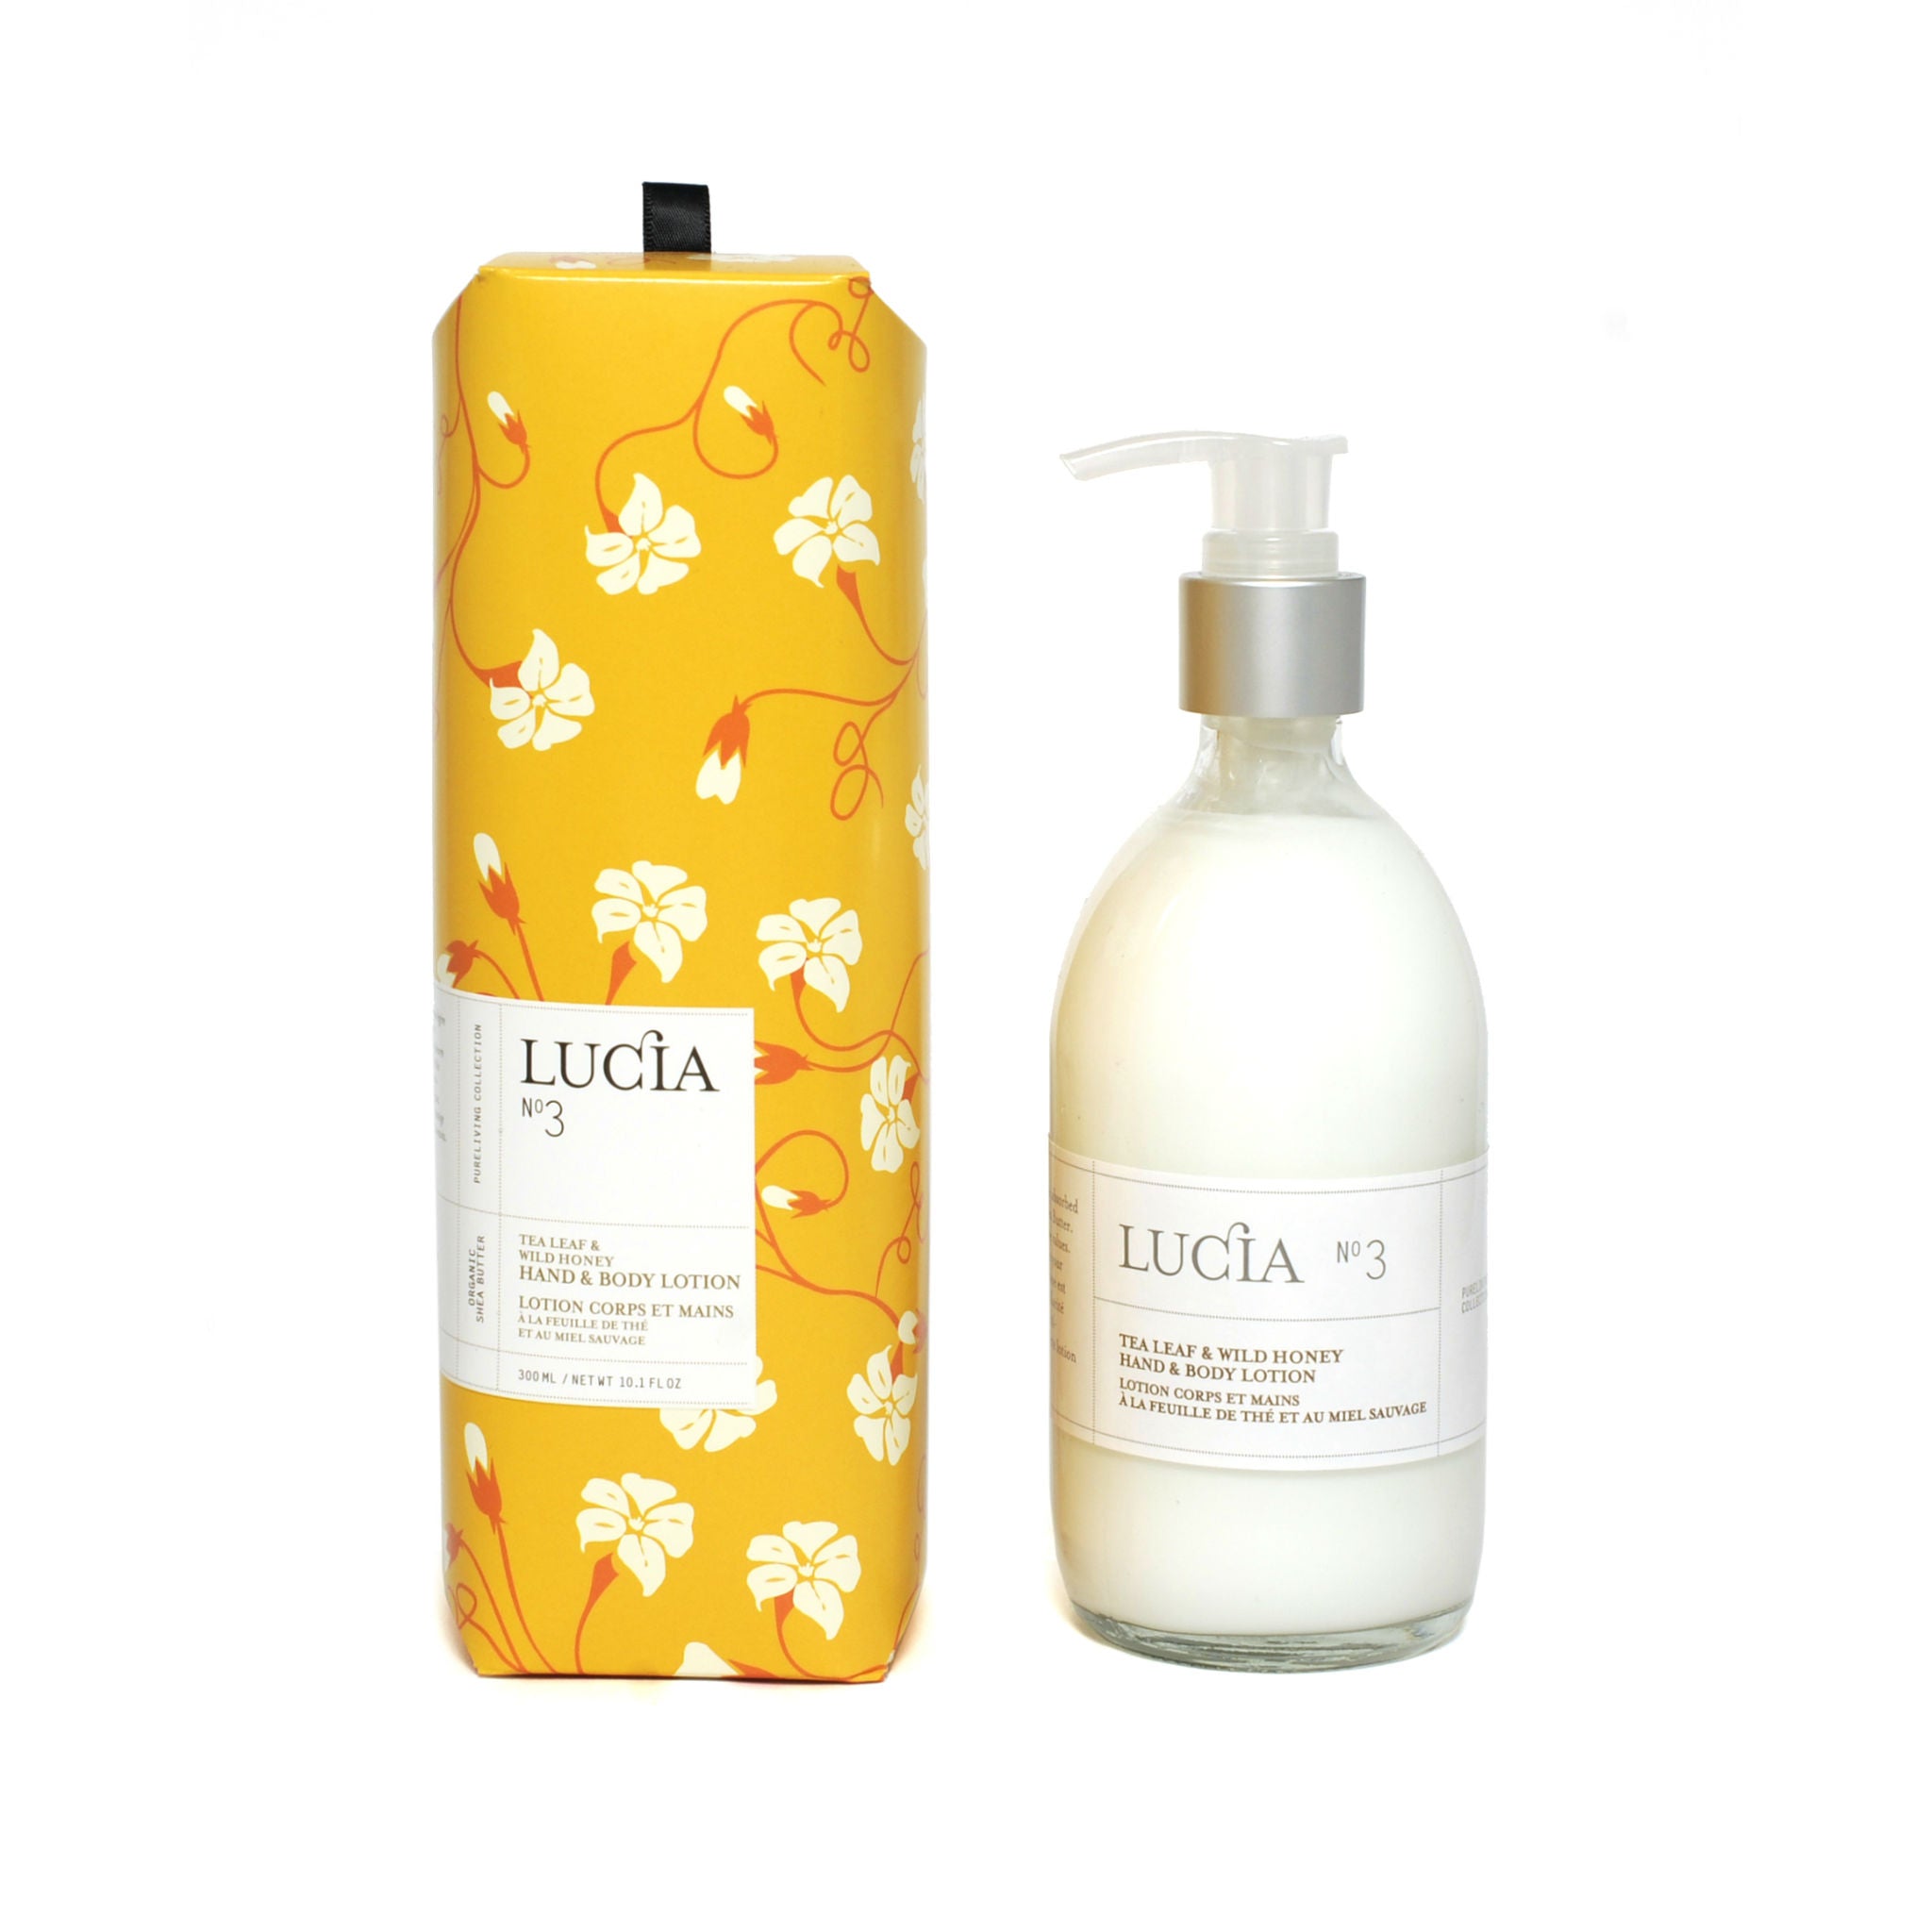 Tea Leaf & Wild Honey, Hand & Body Lotion, LUCIA-VONMEL Luxe Gifts